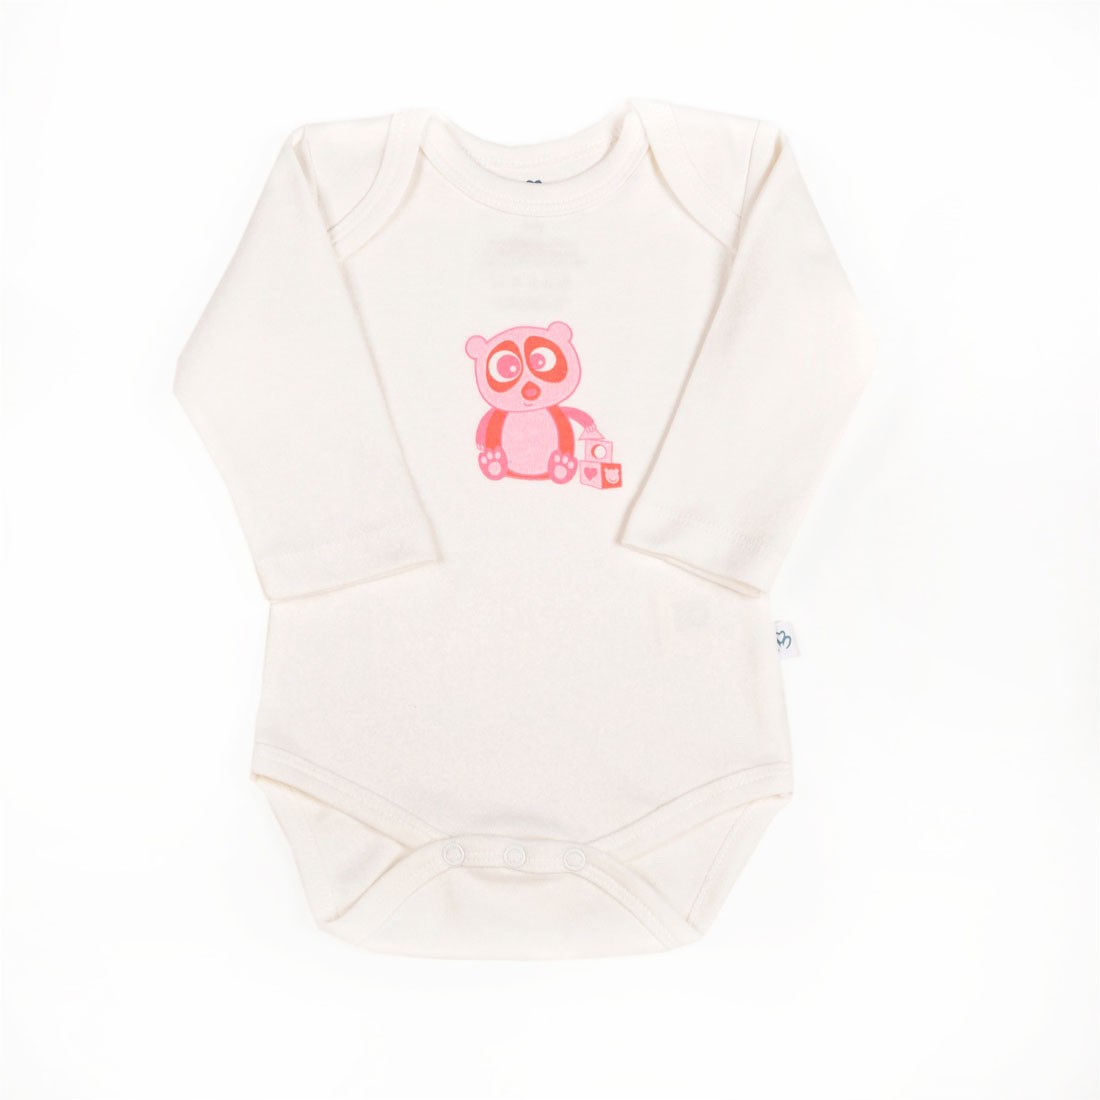 OrganicEra Organic Baby Bodysuit, Long Sleeve